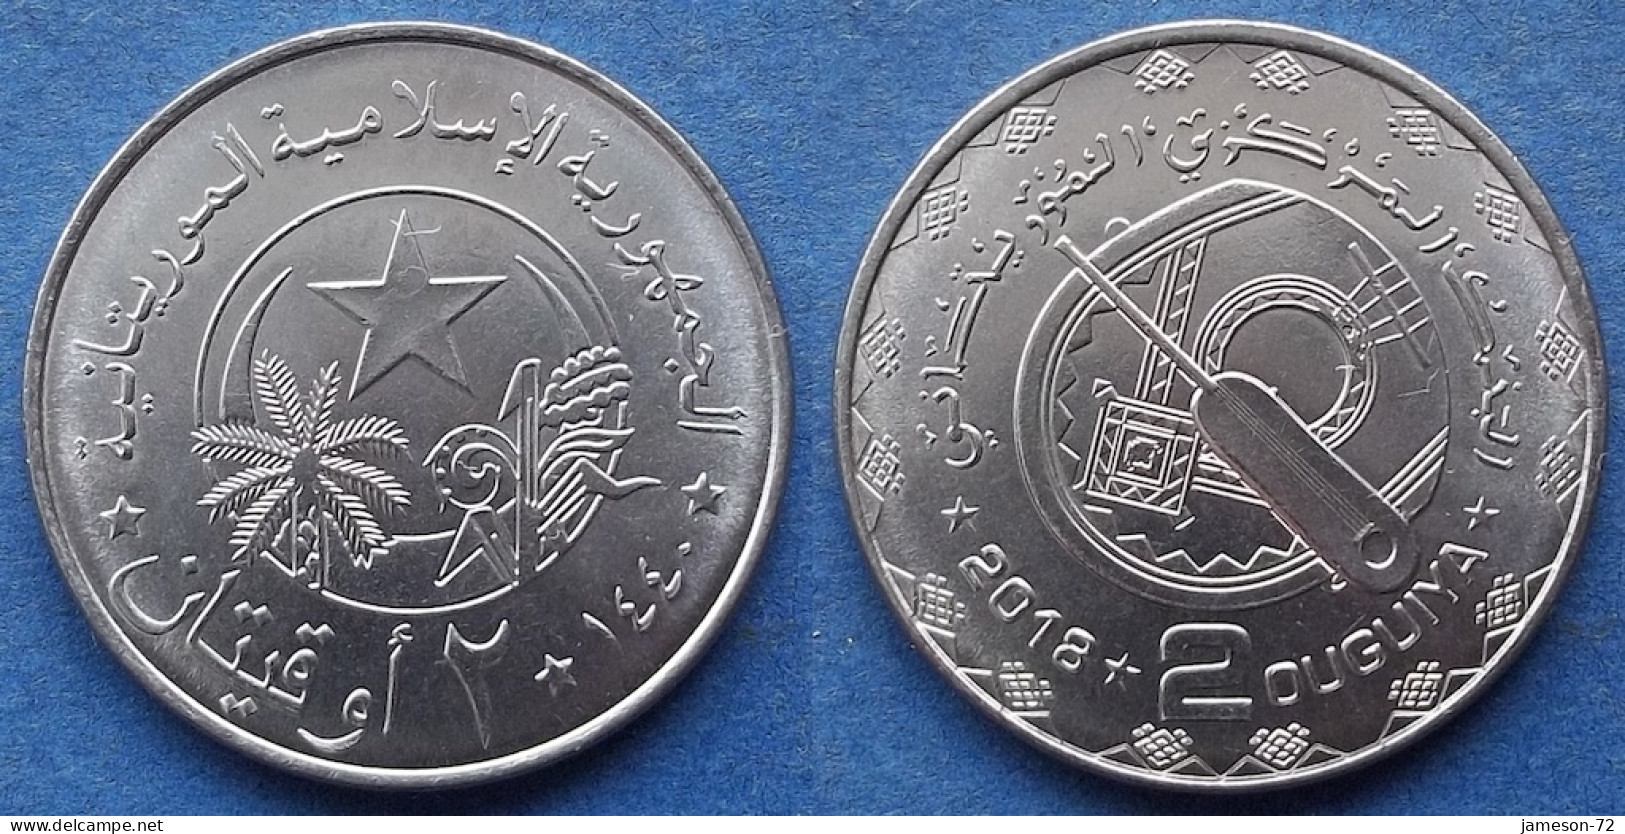 MAURITANIA - 2 Ouguiya AH1440 2018AD "National Instruments" KM# 16 Independent Republic (1960) - Edelweiss Coins - Mauritanie